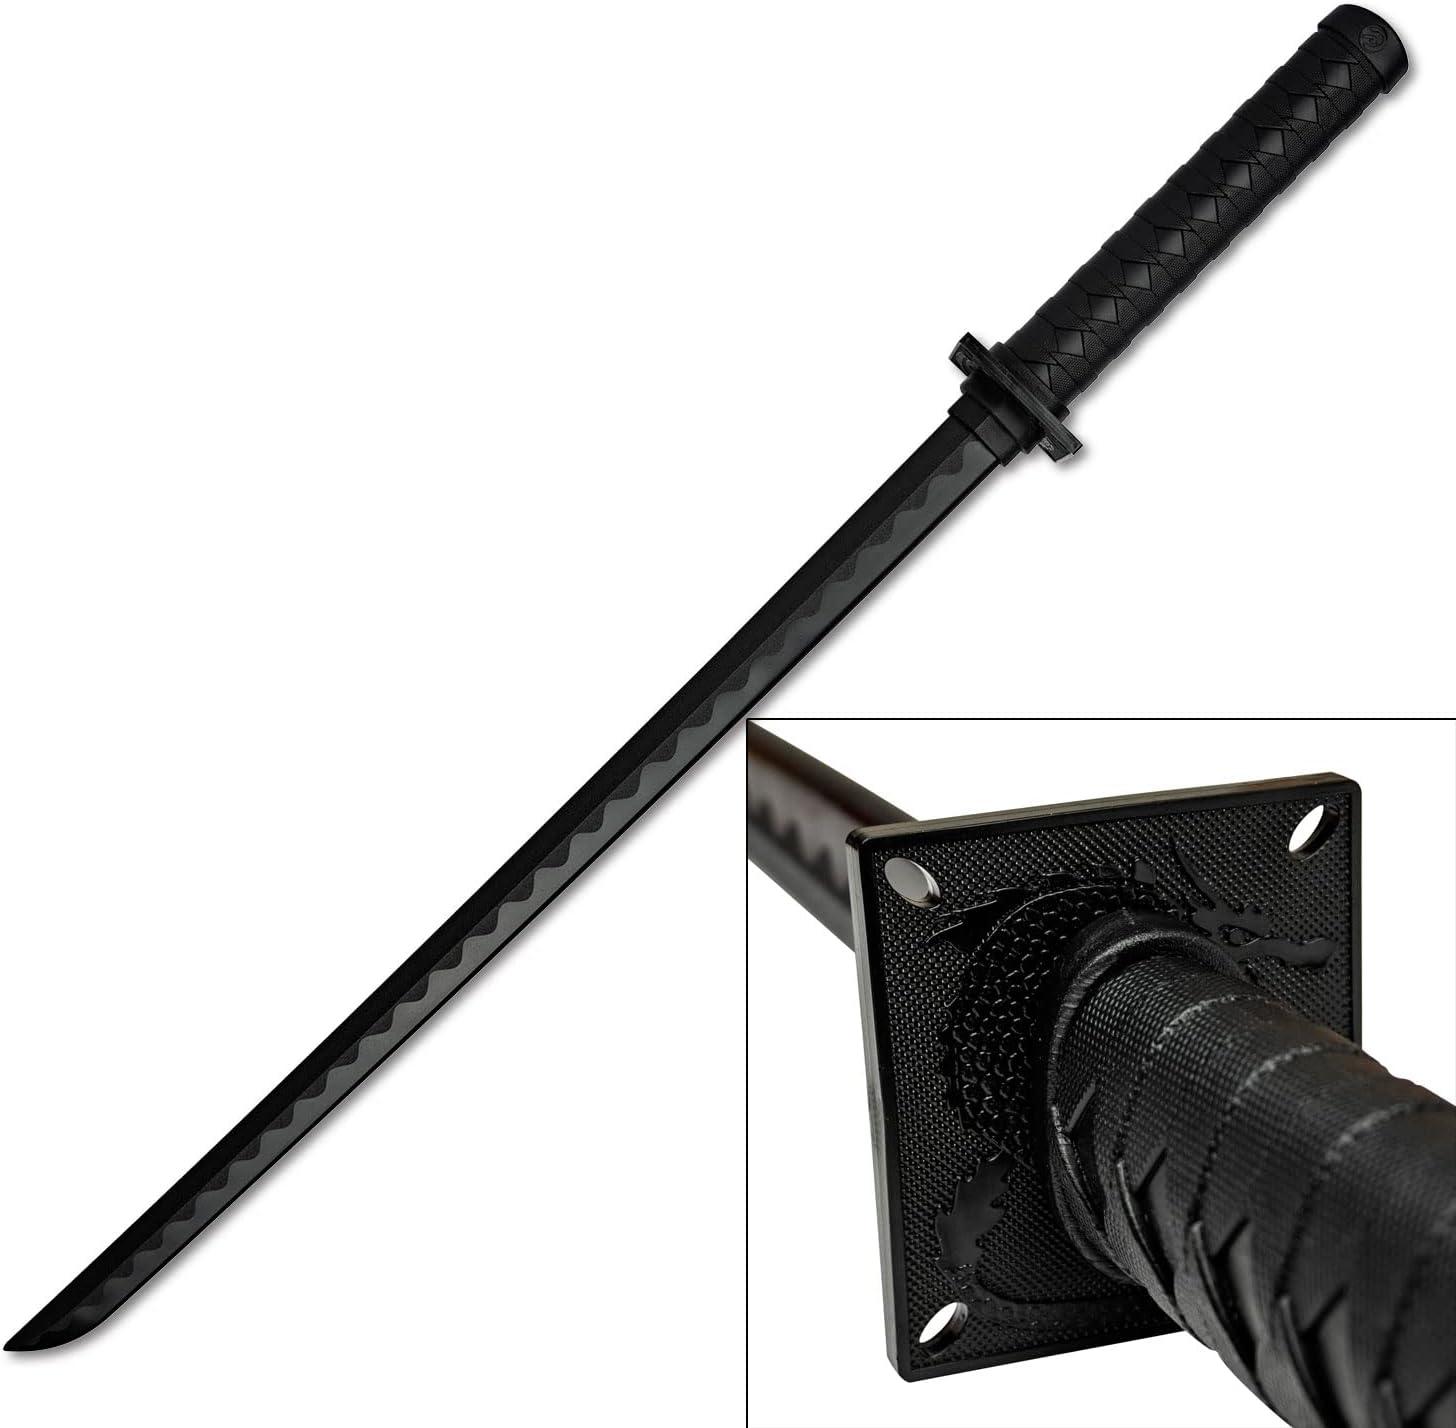 BladesUSA 1801PP Martial Arts Polypropylene Ninja Sword Training Equipment for $6.29